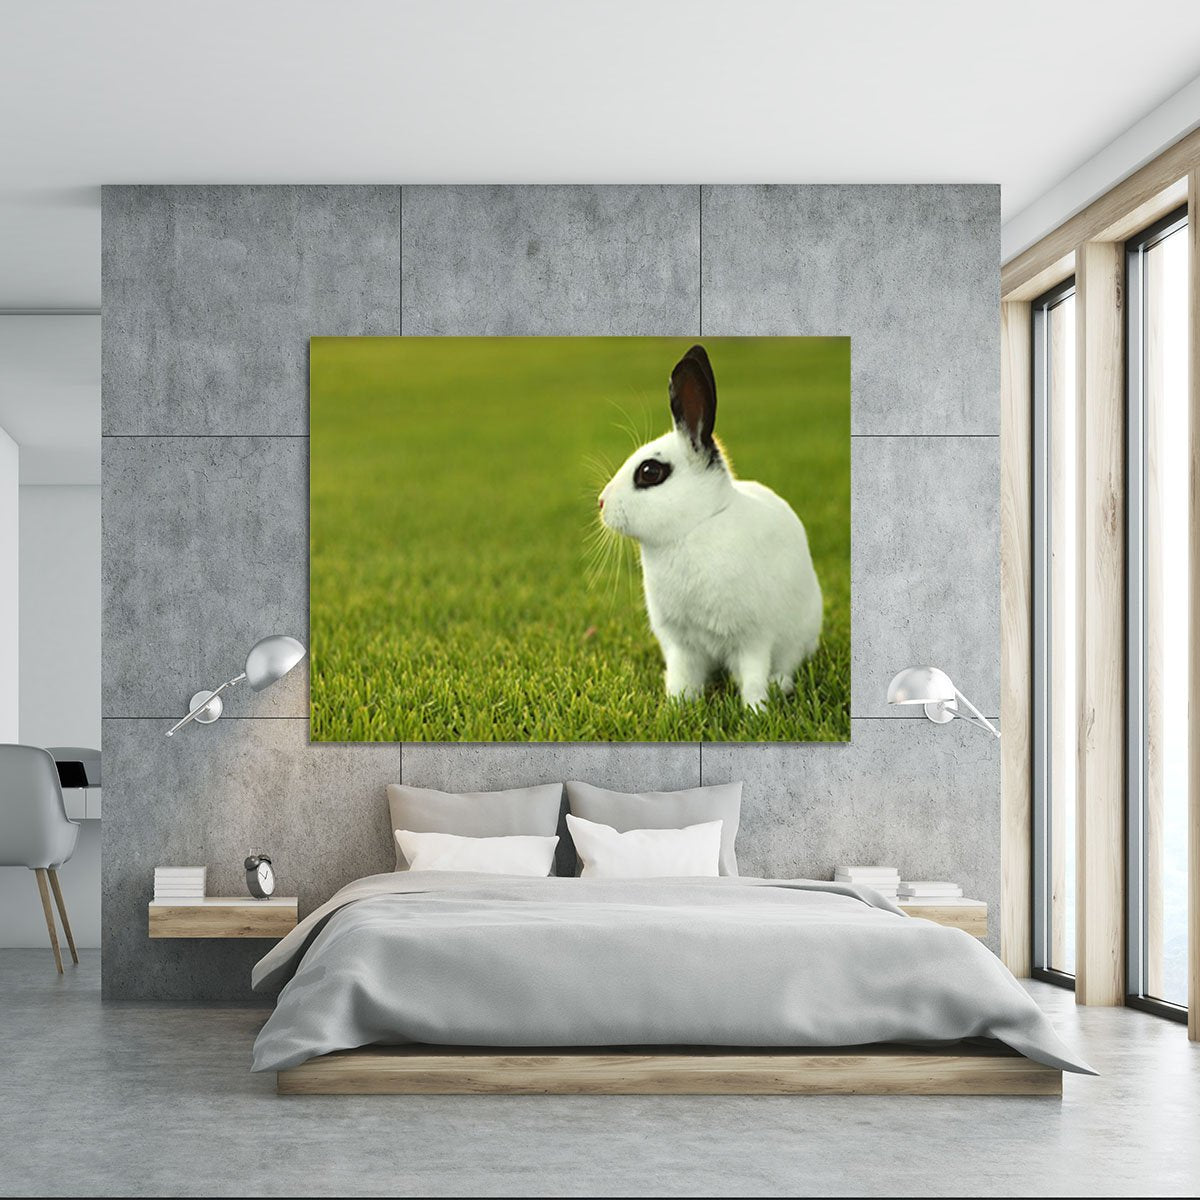 Adorable White Bunny Rabbit Canvas Print or Poster